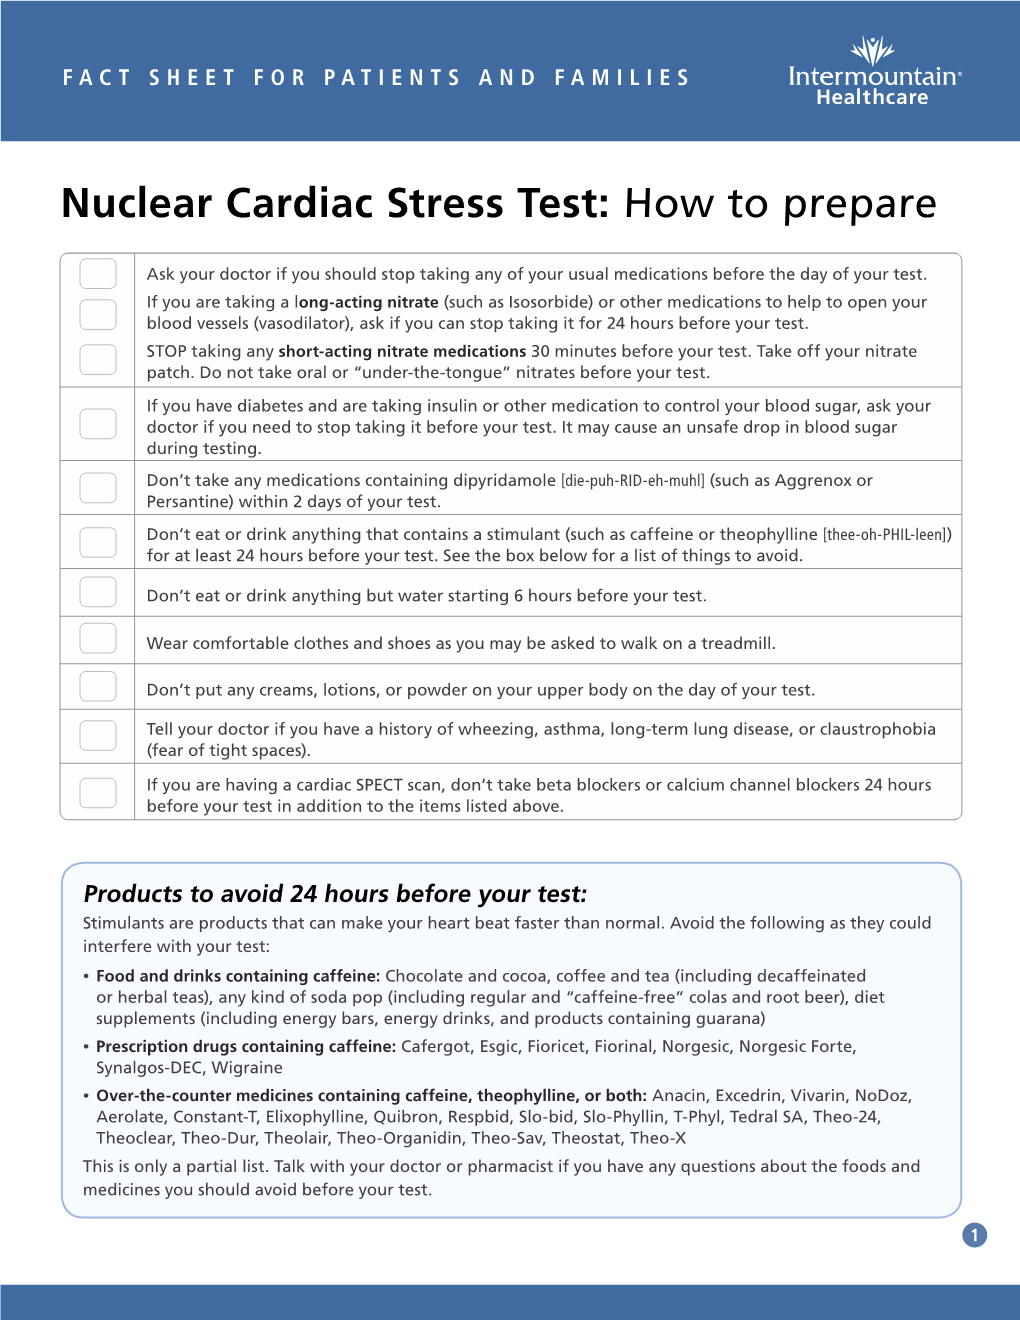 Nuclear Cardiac Stress Test: How to Prepare Fact Sheet